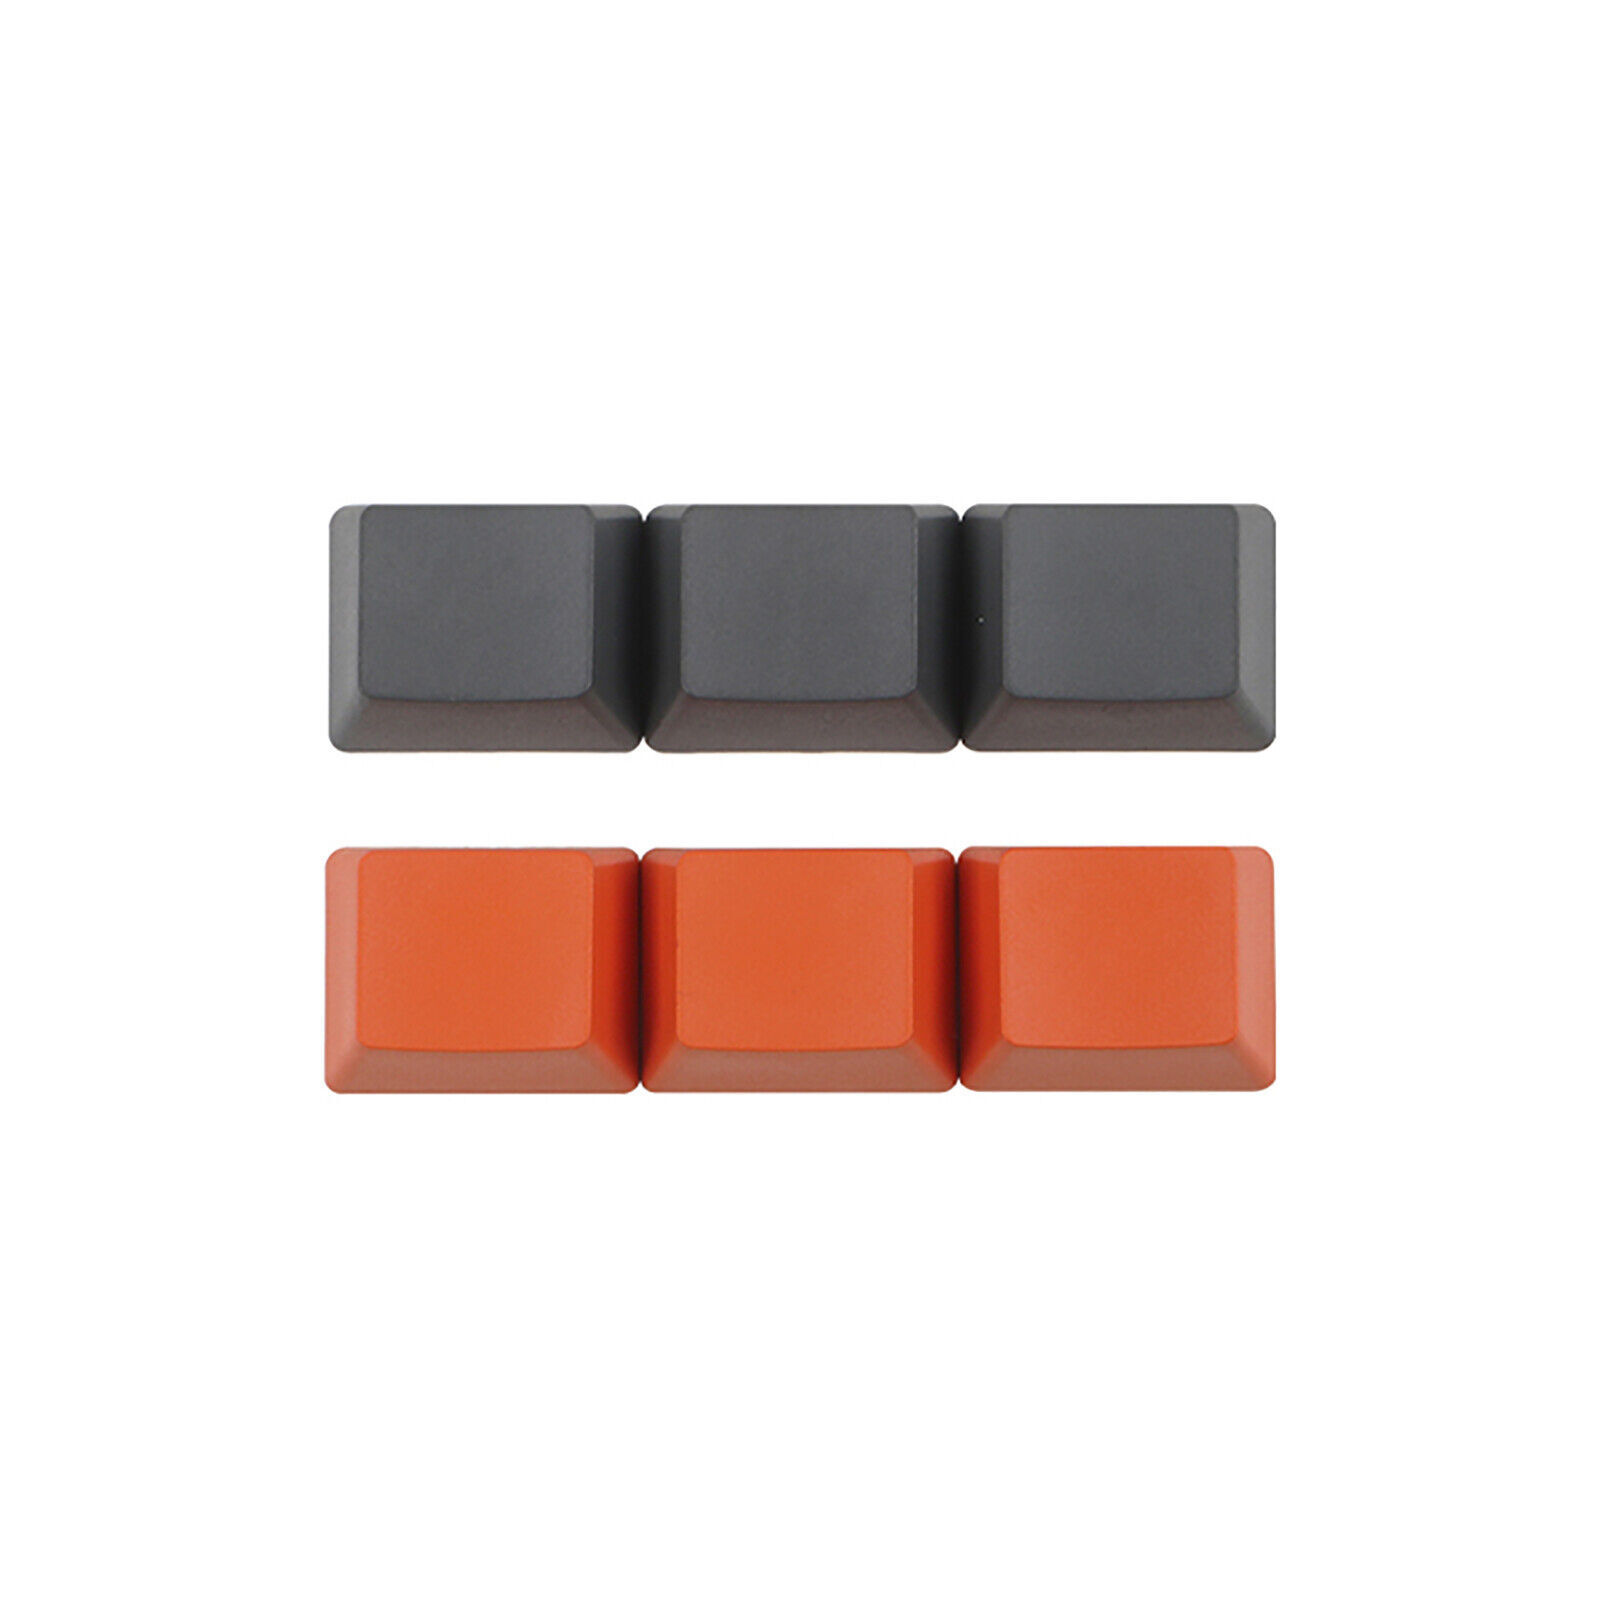 Key Cap OEM R1 1.25U Orange Grey PBT Key Caps No Engraved Alt Ctrl win Fn Keycap